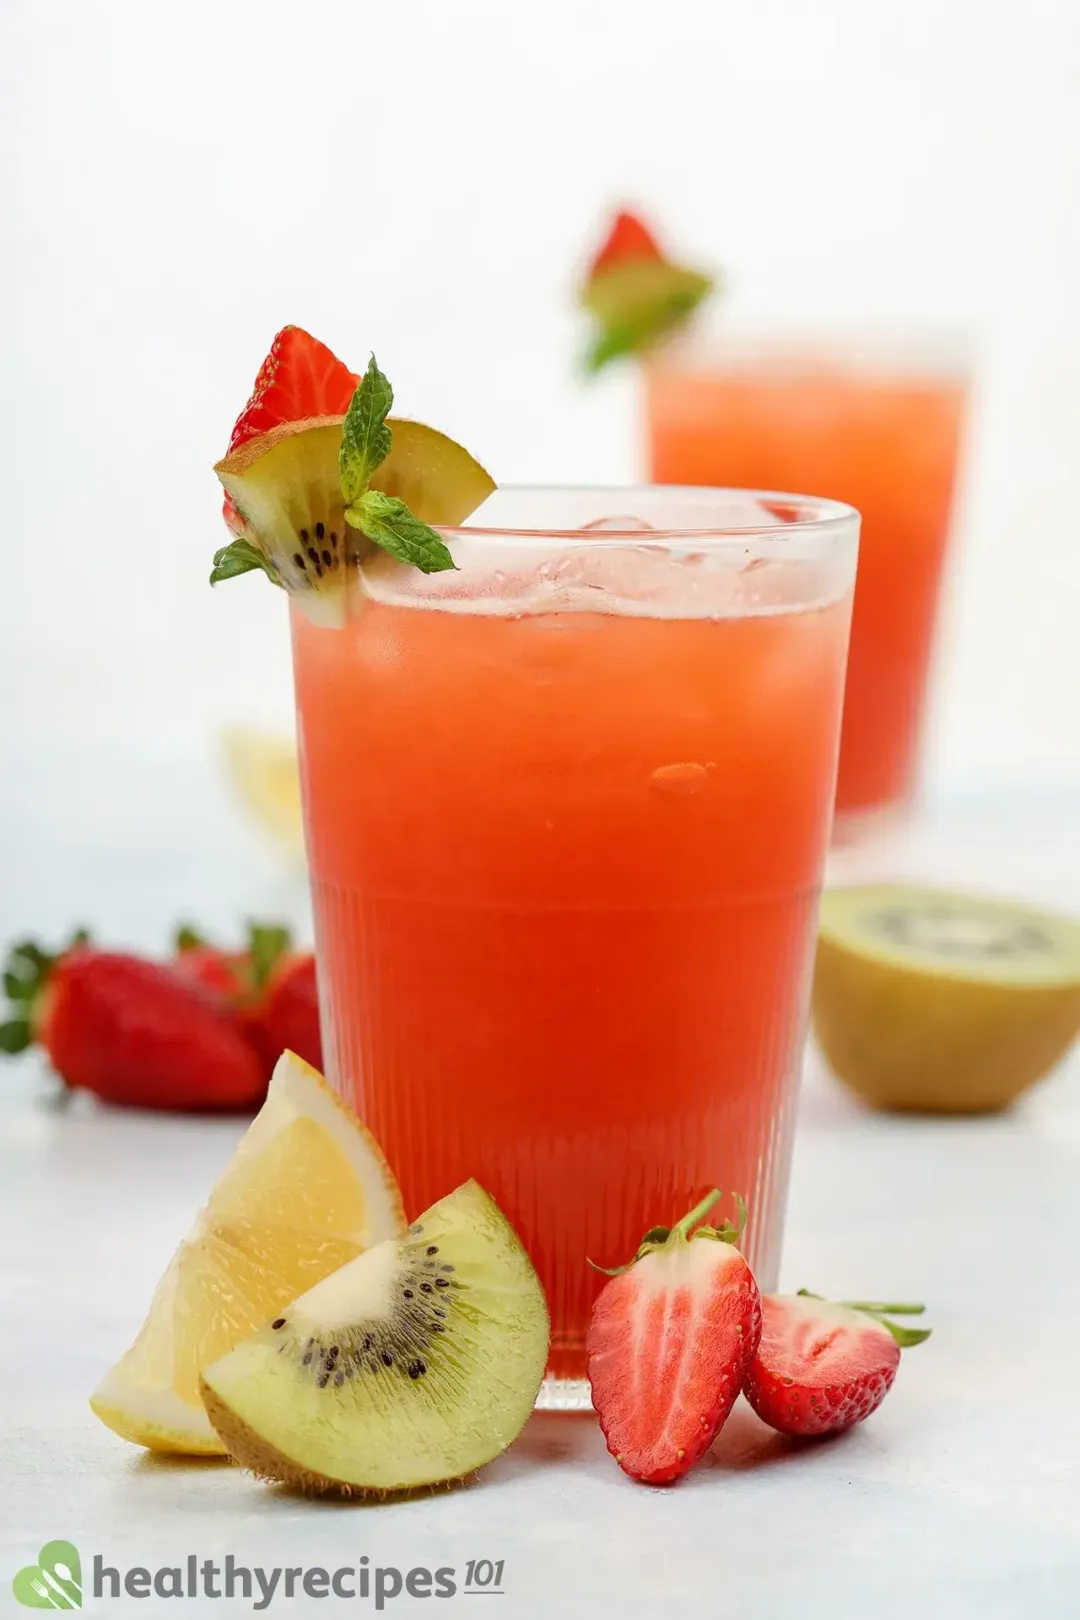 Strawberry Kiwi Juices Benefits